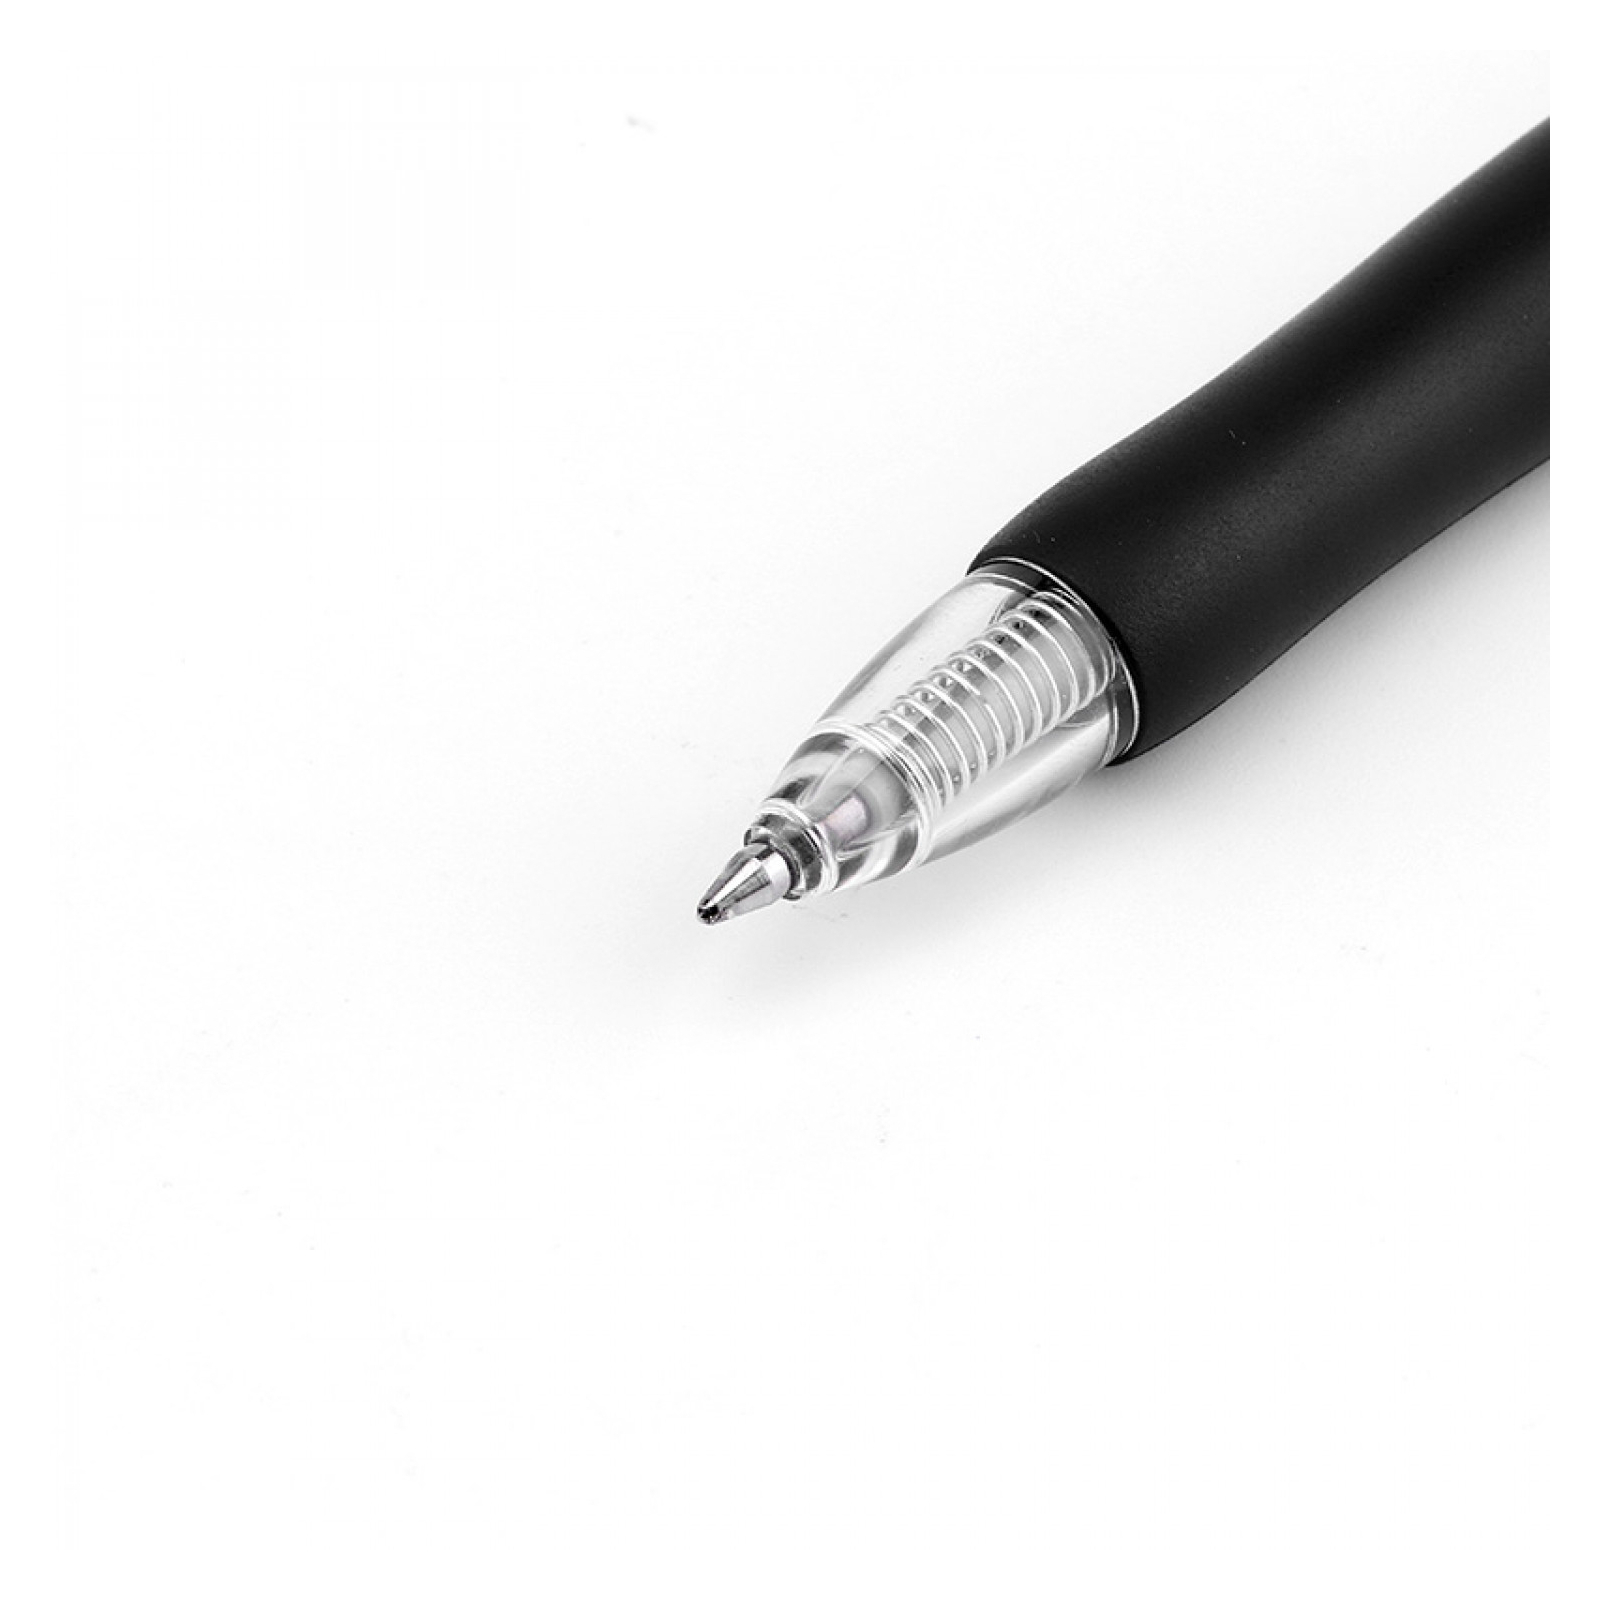 Ручка гелева Baoke Elite автоматична з грипом 0,7 мм чорна (PEN-BAO-PC1910-B) зображення 3